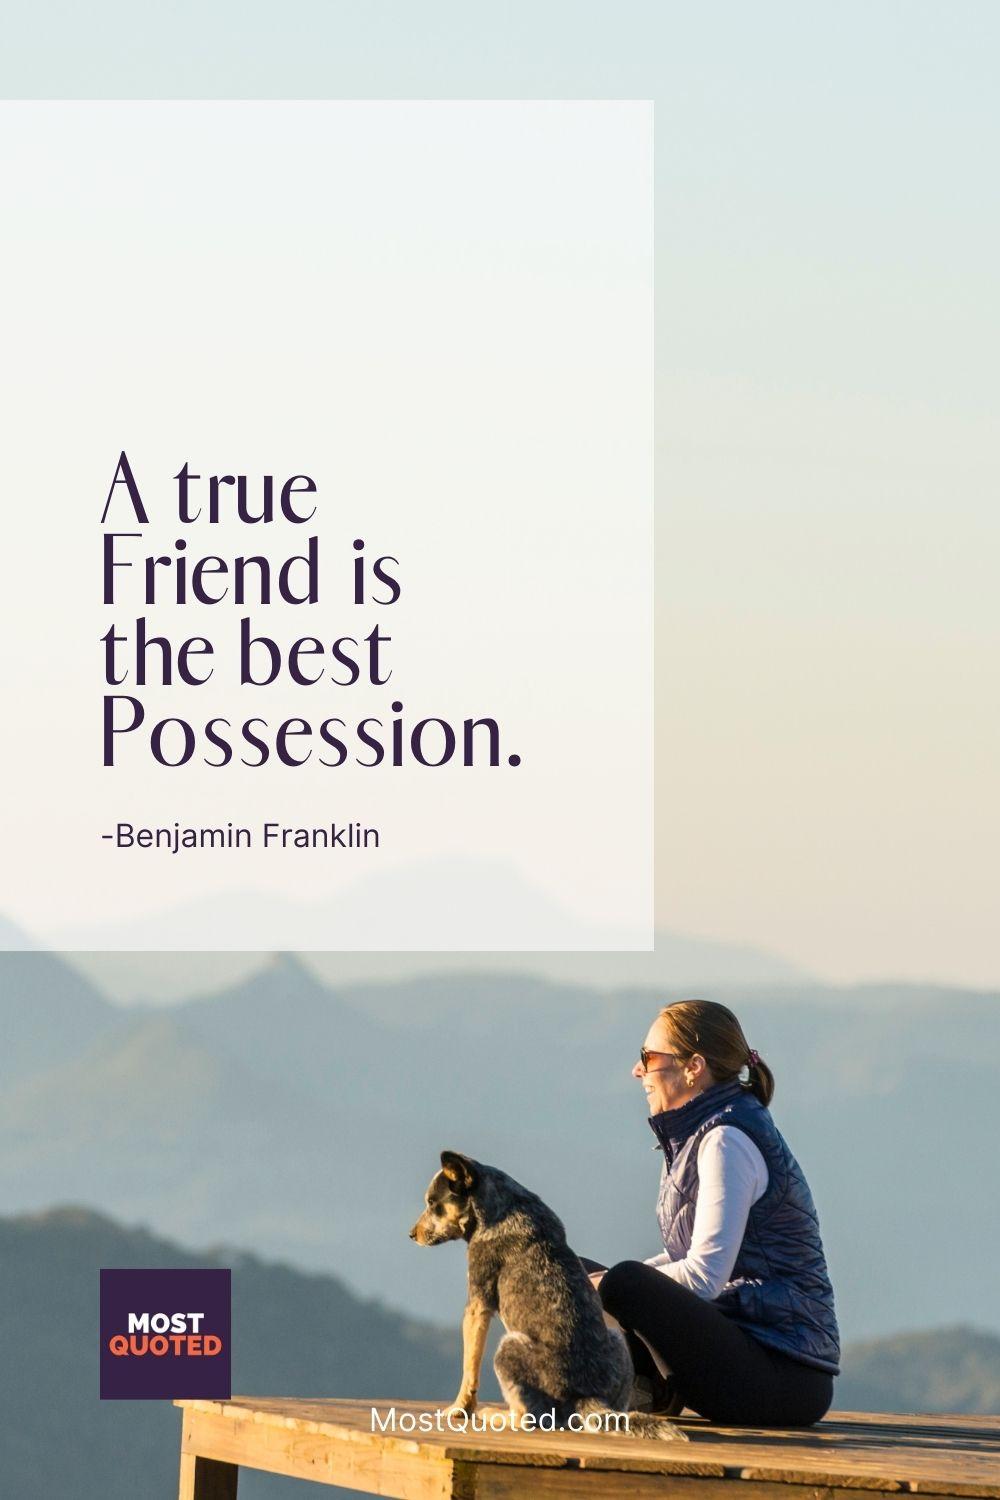 A true Friend is the best Possession. - Benjamin Franklin